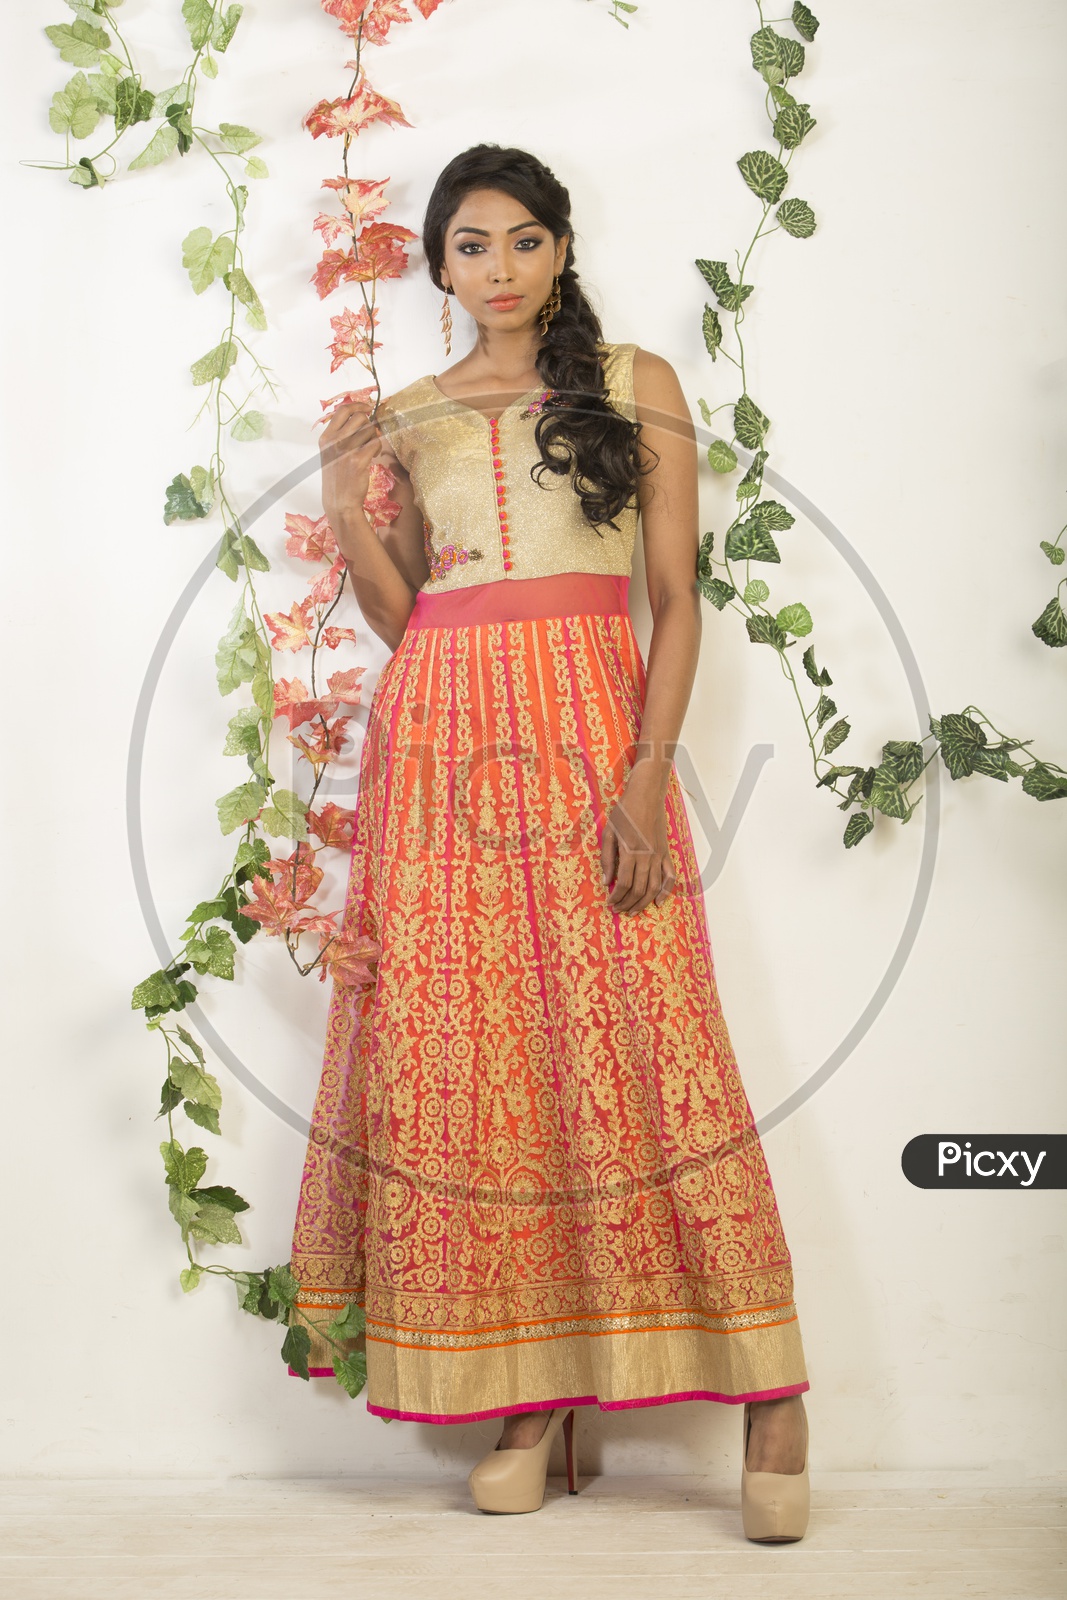 Indian girl dressed up in orange dress portrait in Studio Lighting / Traditionally dressed up girl